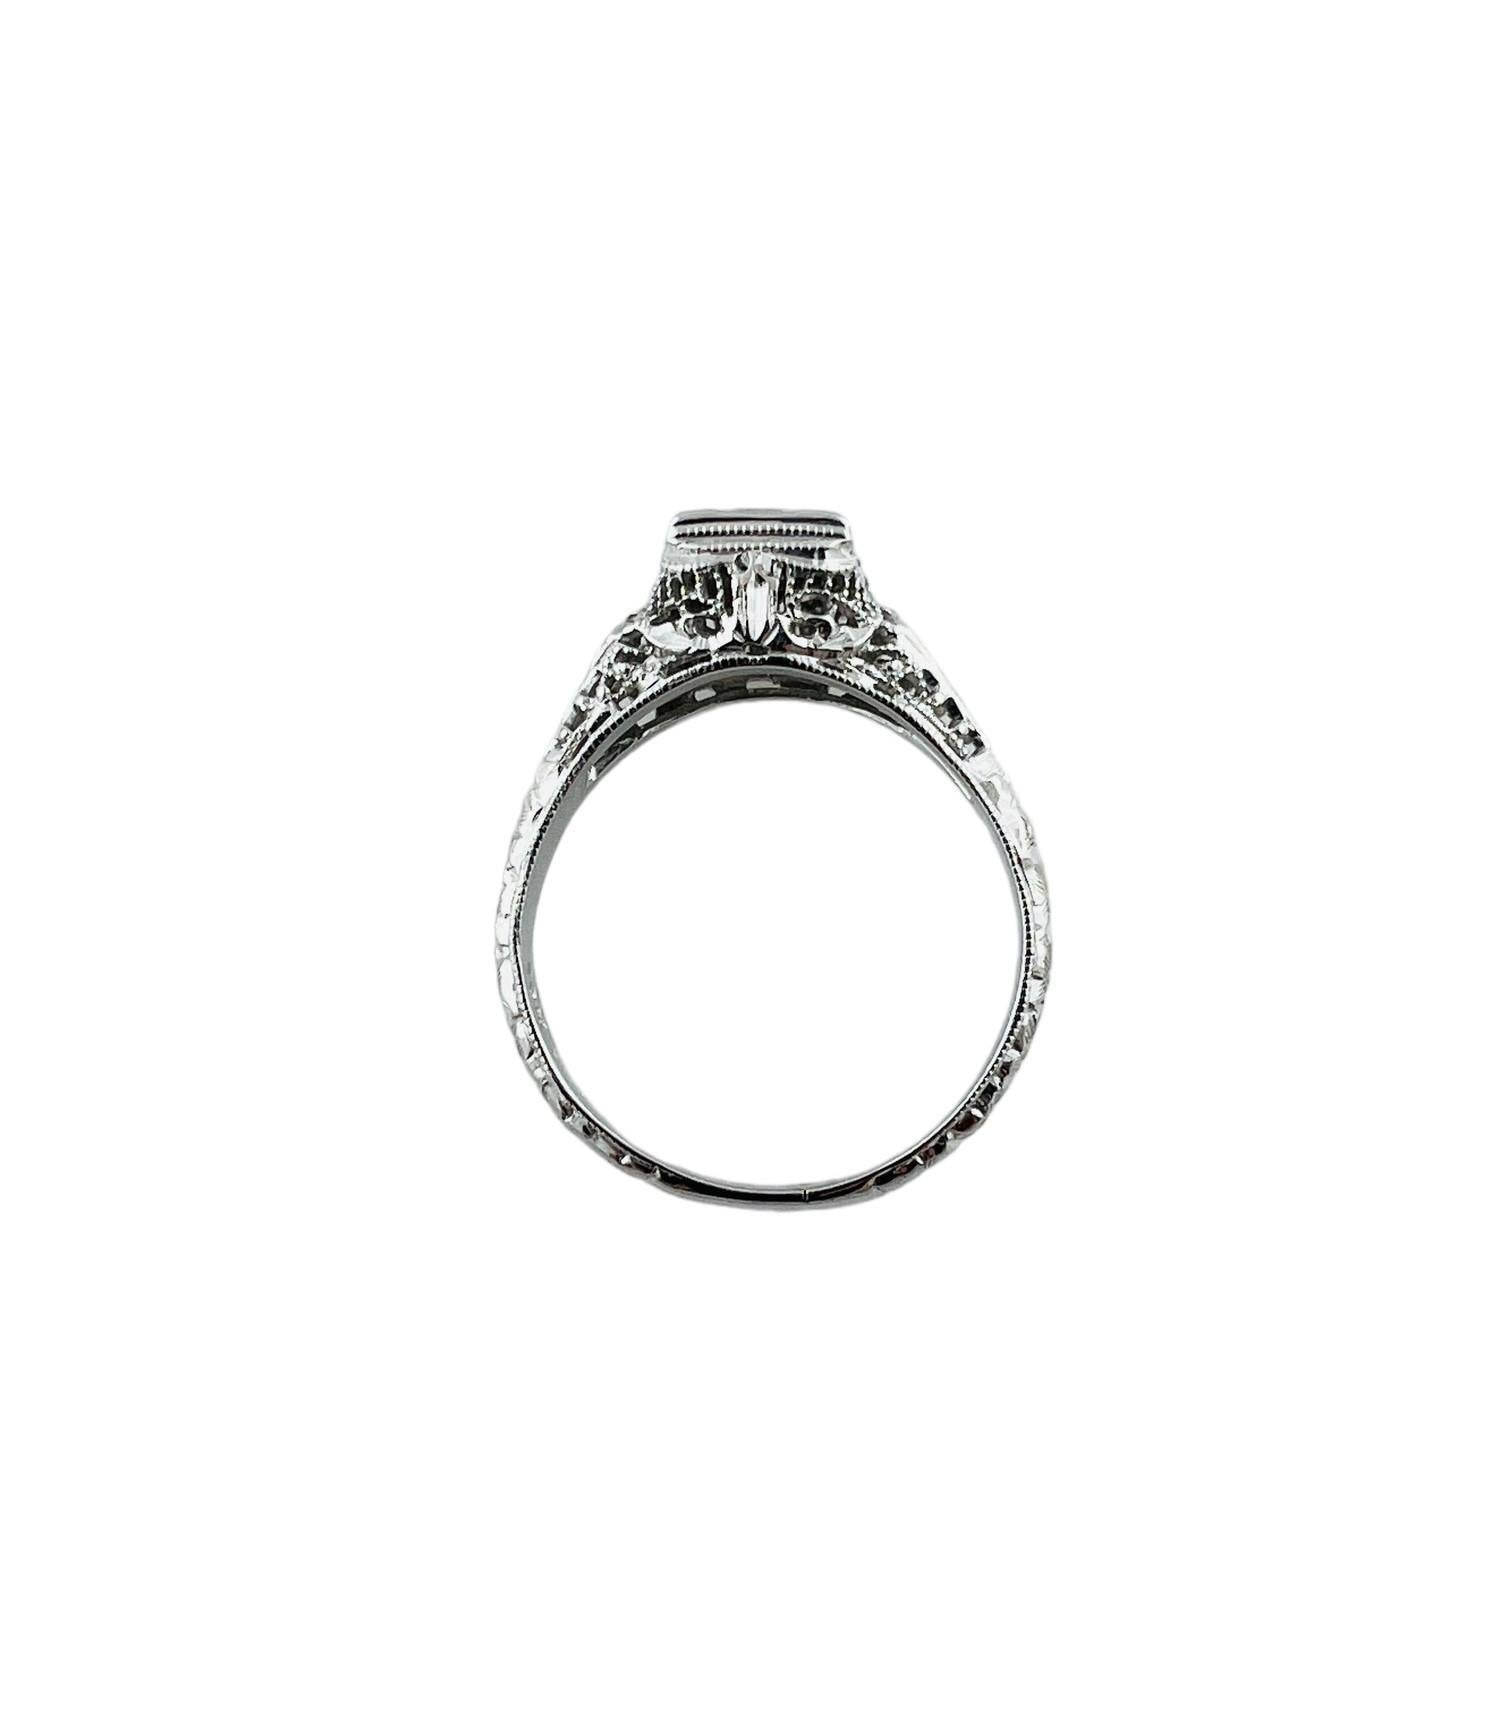 18K White Gold Filigree Diamond Ring Size 7 #16547 For Sale 1